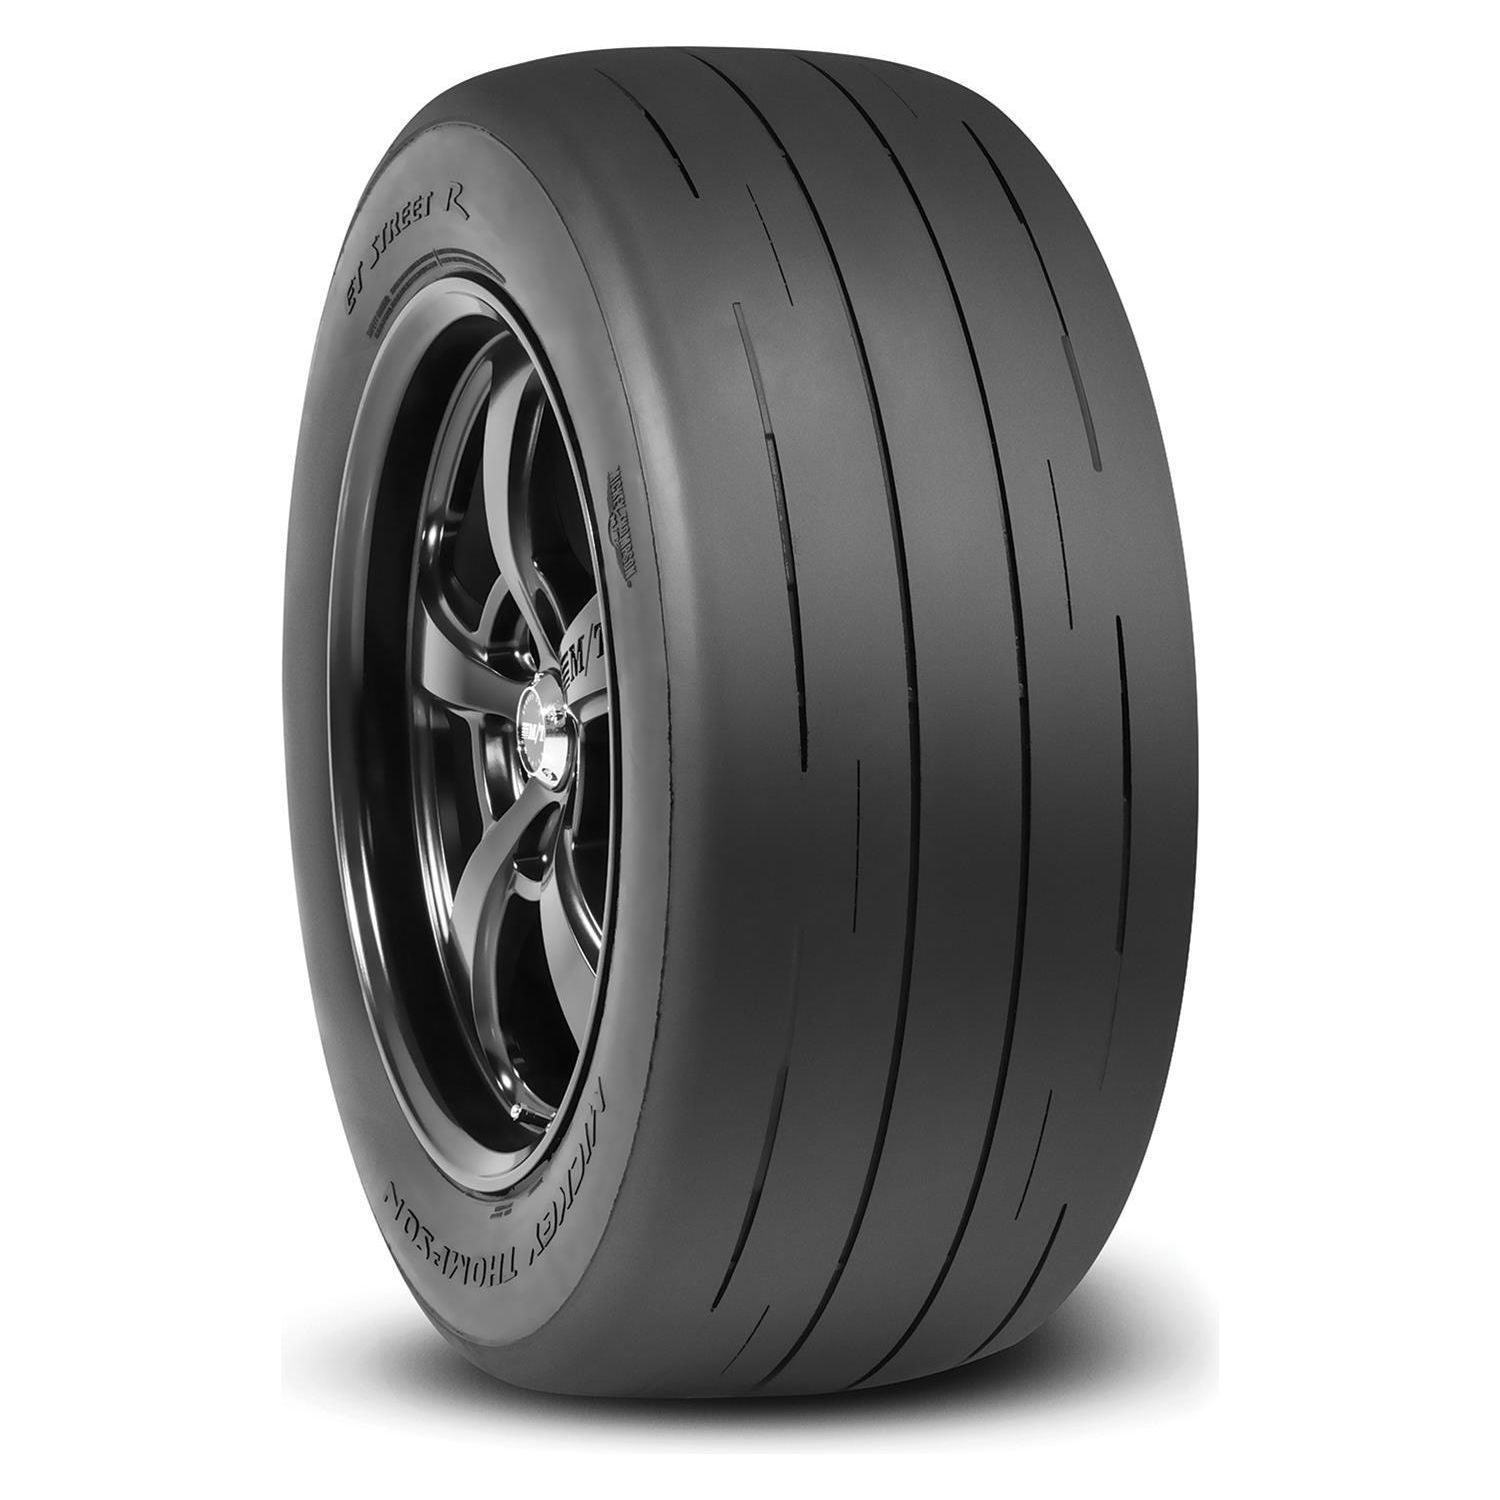 P225/50R15 ET Street R Tire